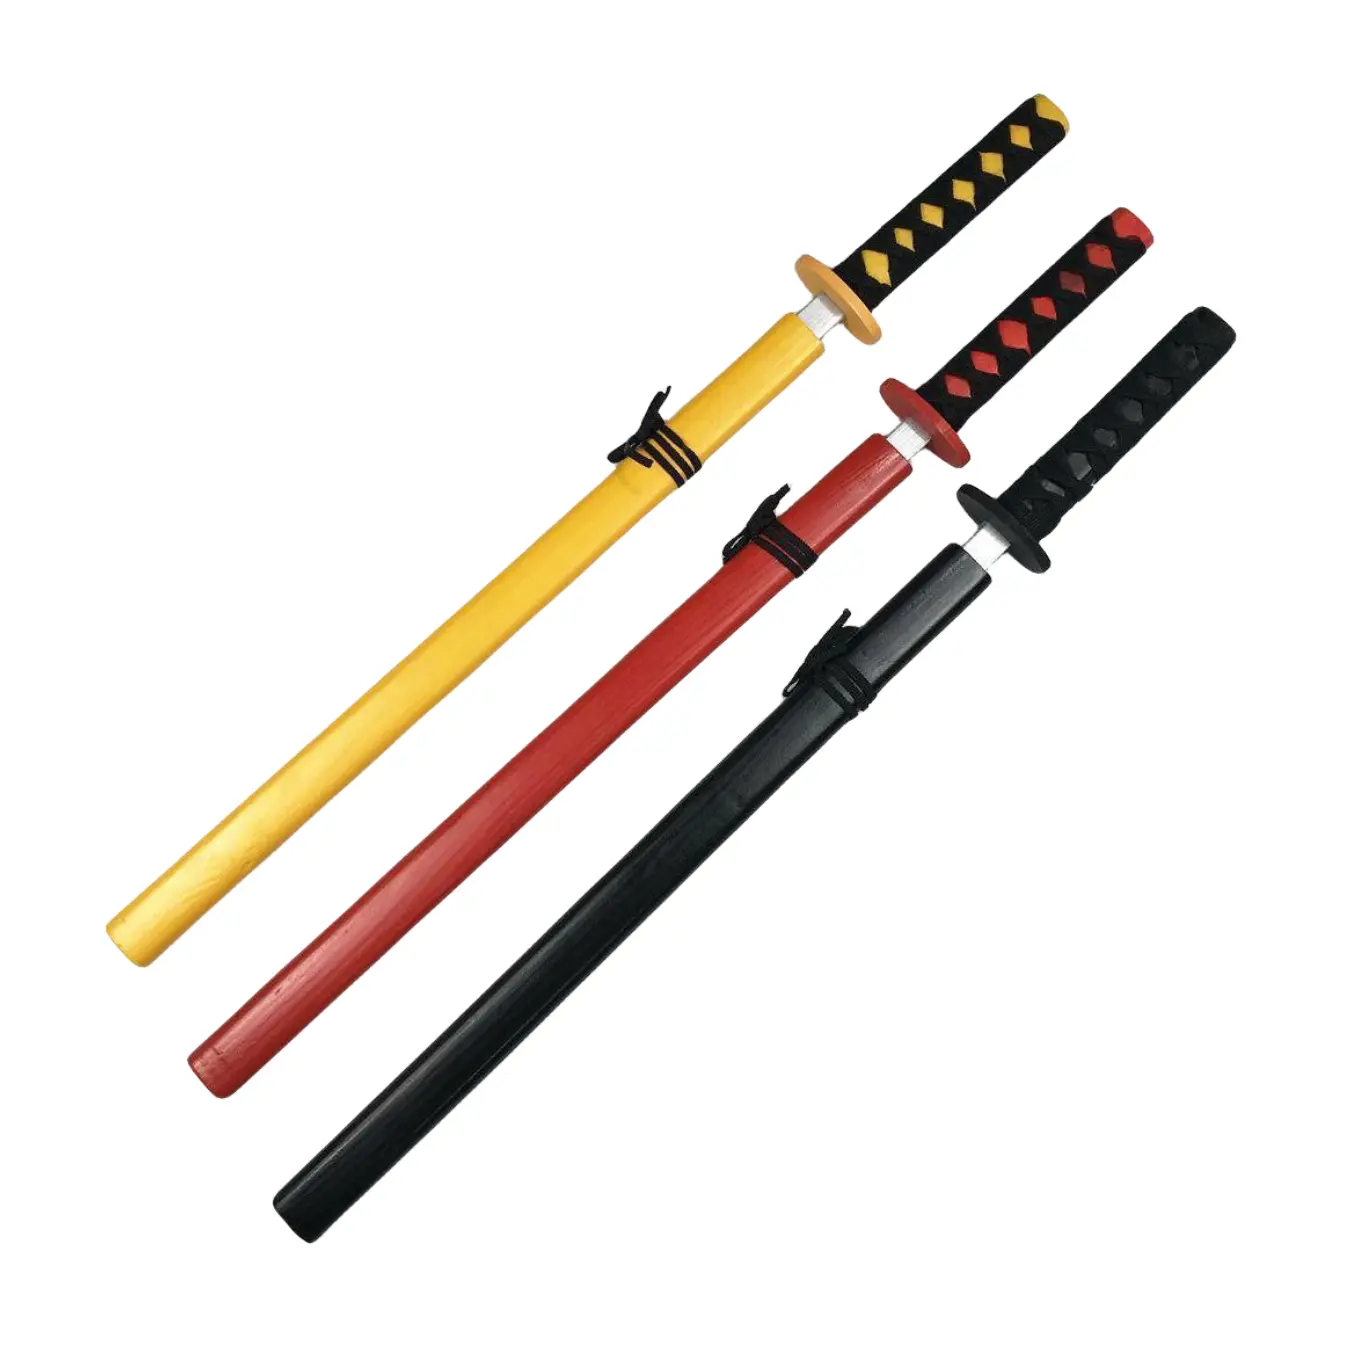 Groothandel Goedkope Hoge Kwaliteit Anime Karakter Sabel Houten Samurai Zwaard Model Serie Bamboe Handwerk